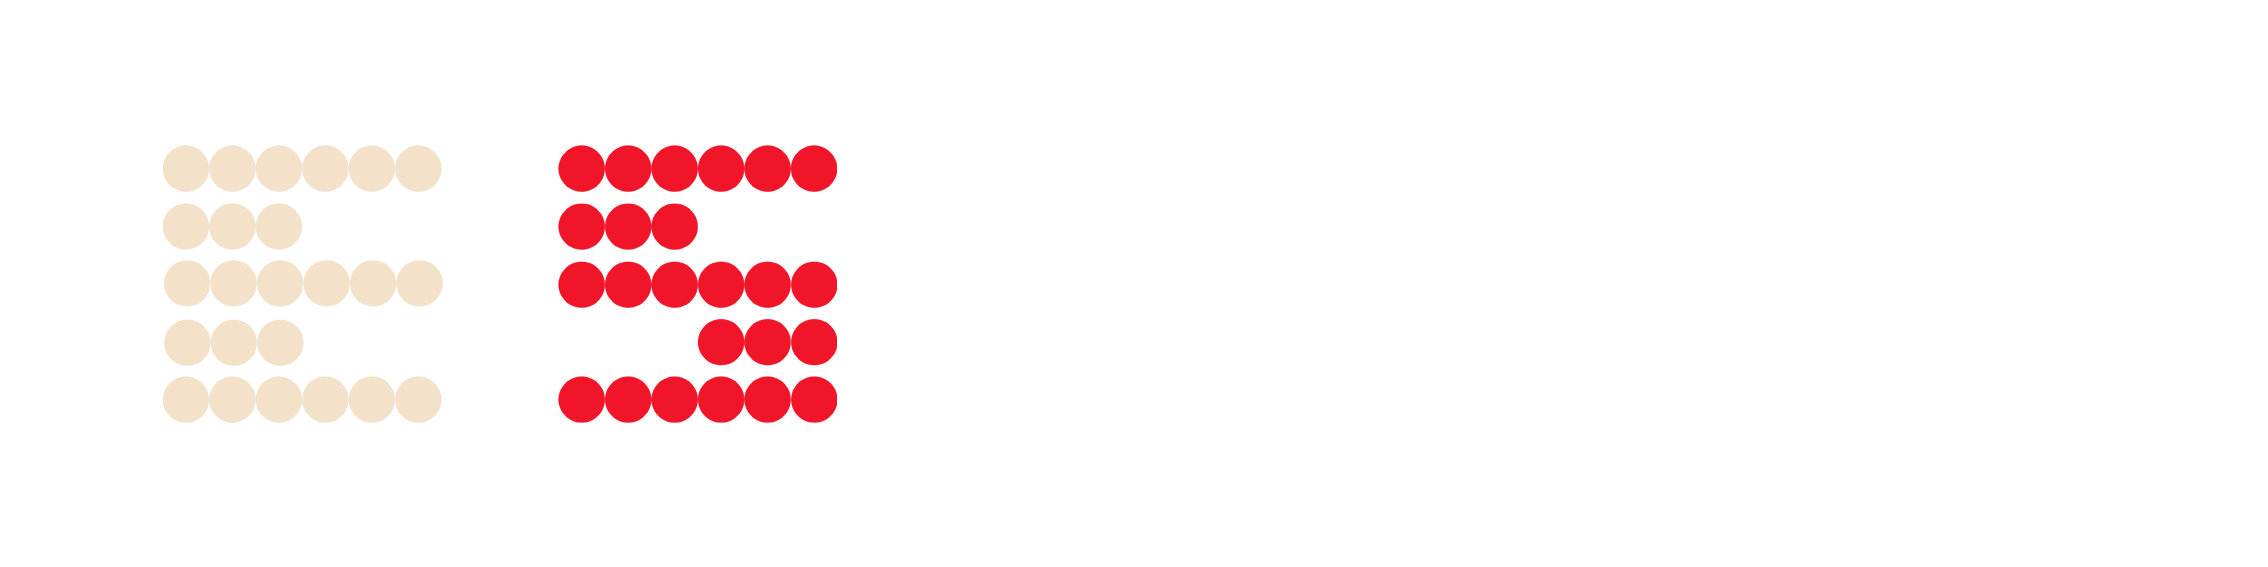 Elektronikpartner Sachsen